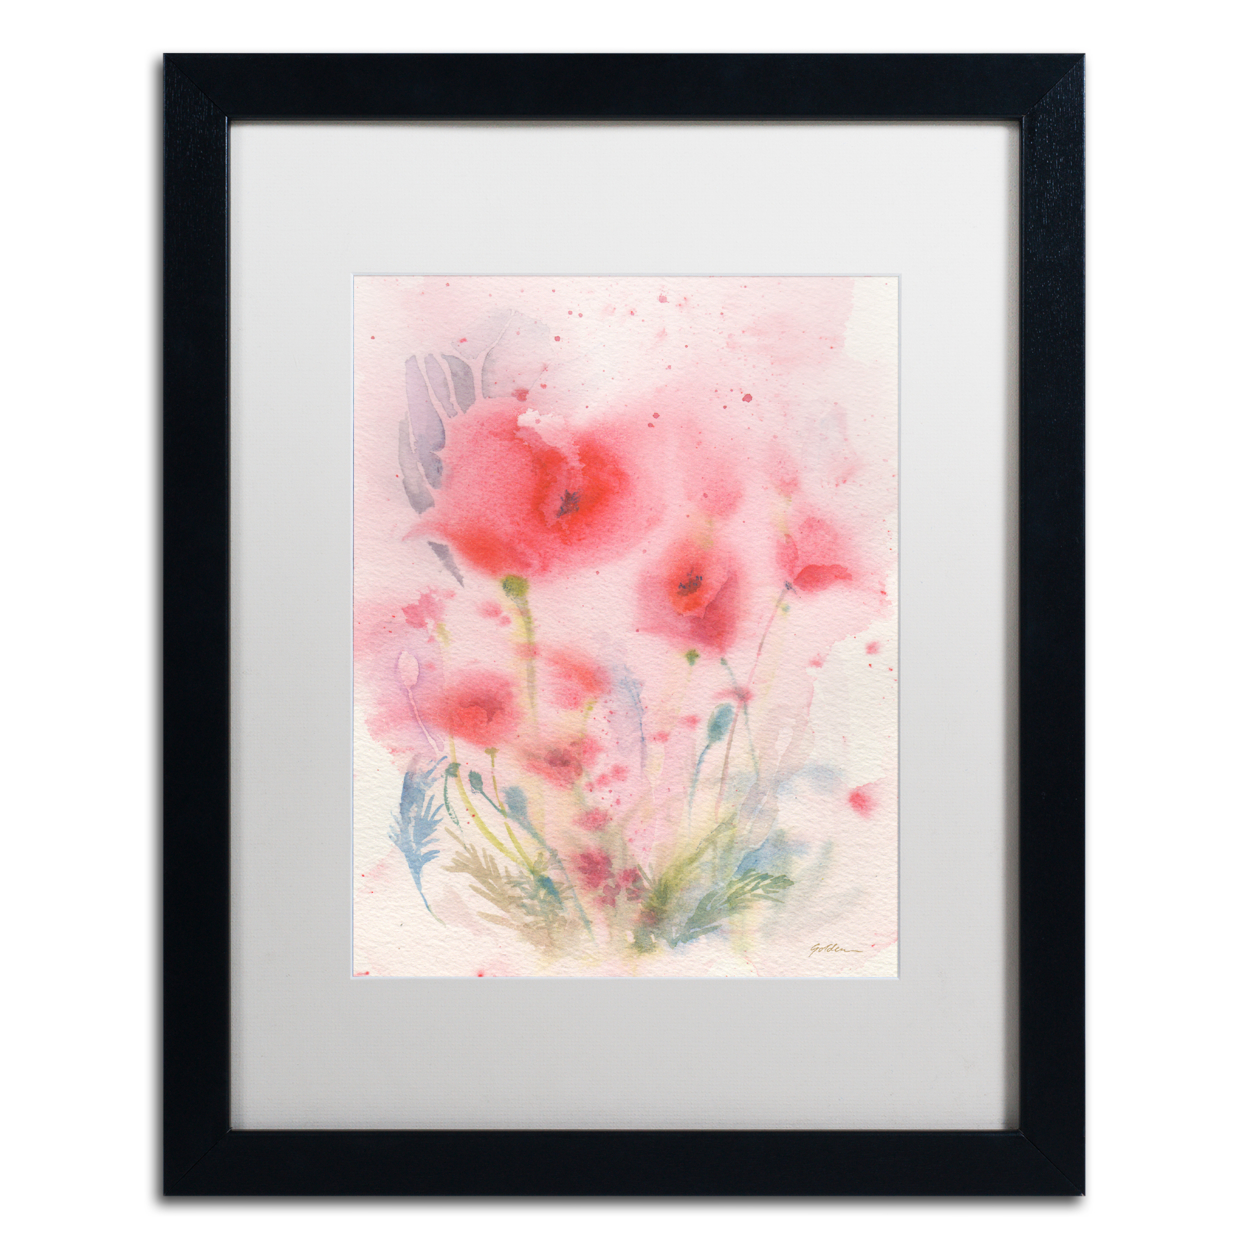 Sheila Golden 'Pink Reverie' Black Wooden Framed Art 18 X 22 Inches